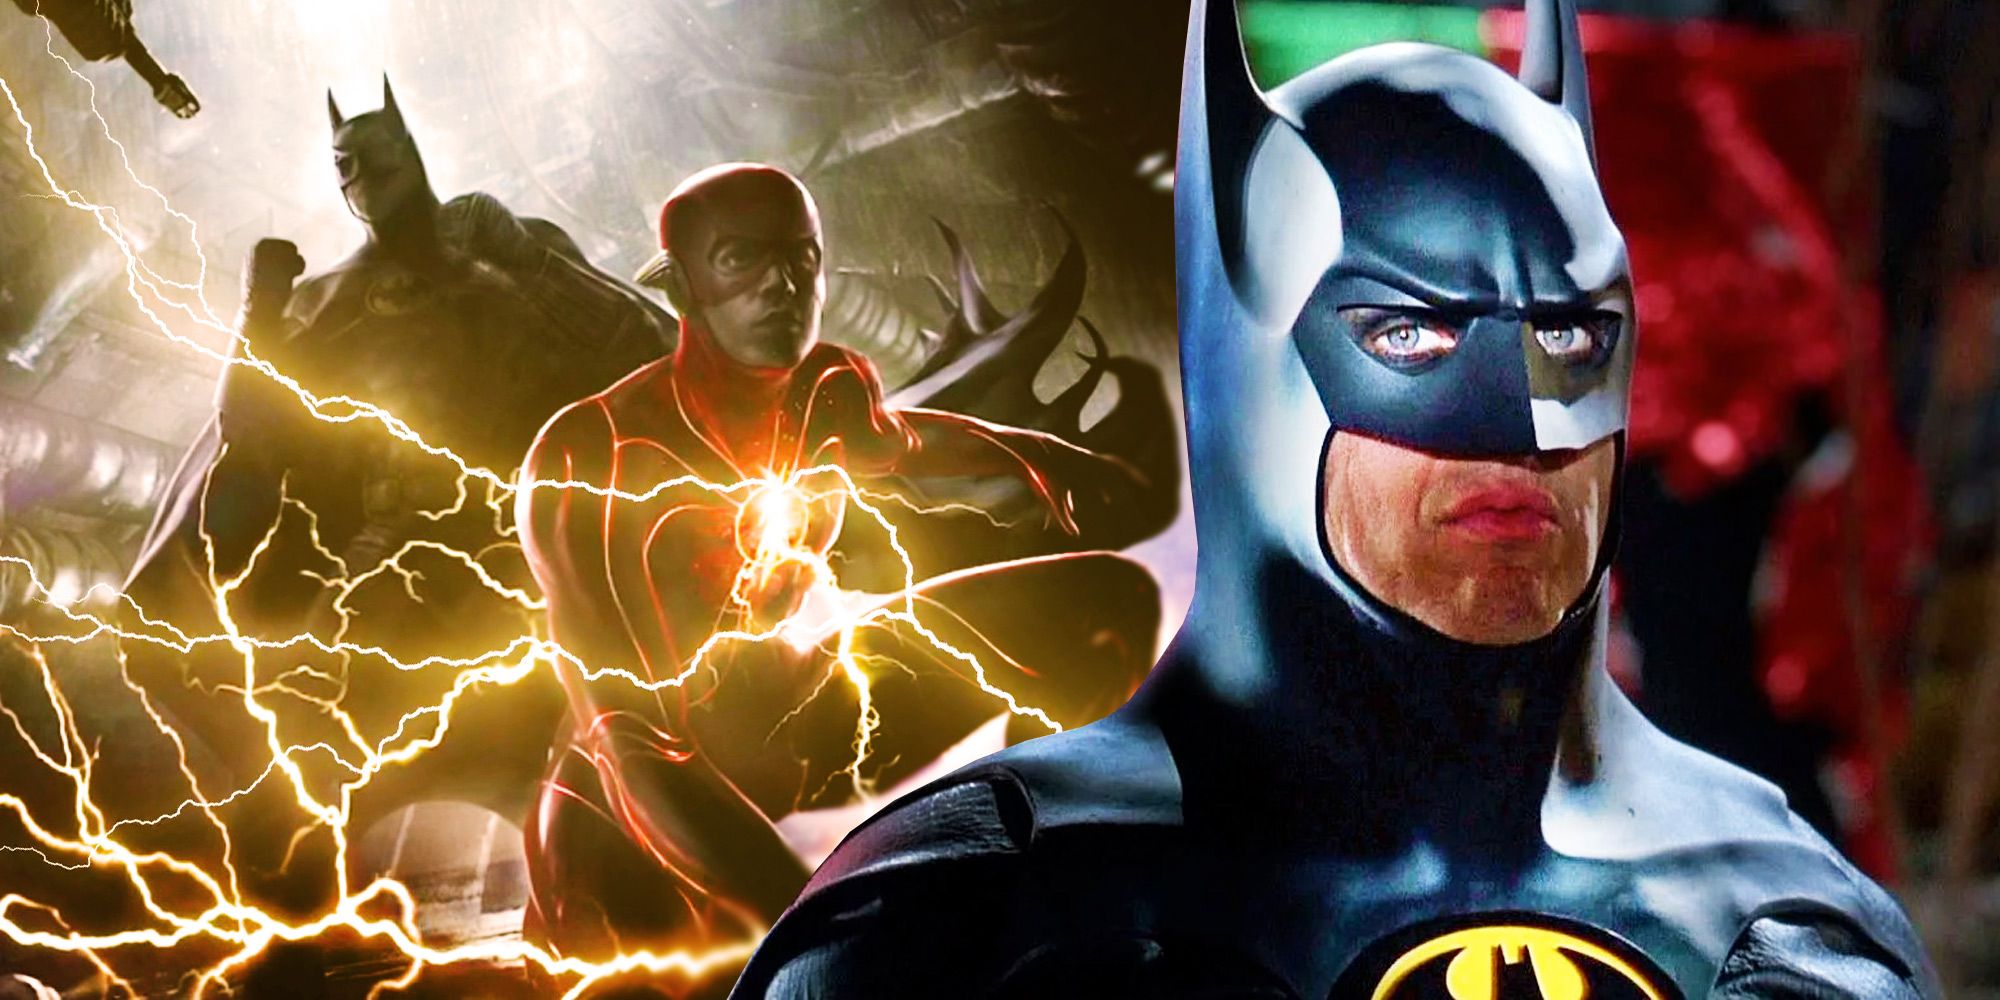 Batman and the Flash in Flash concept art, and Michael Keaton as Batman